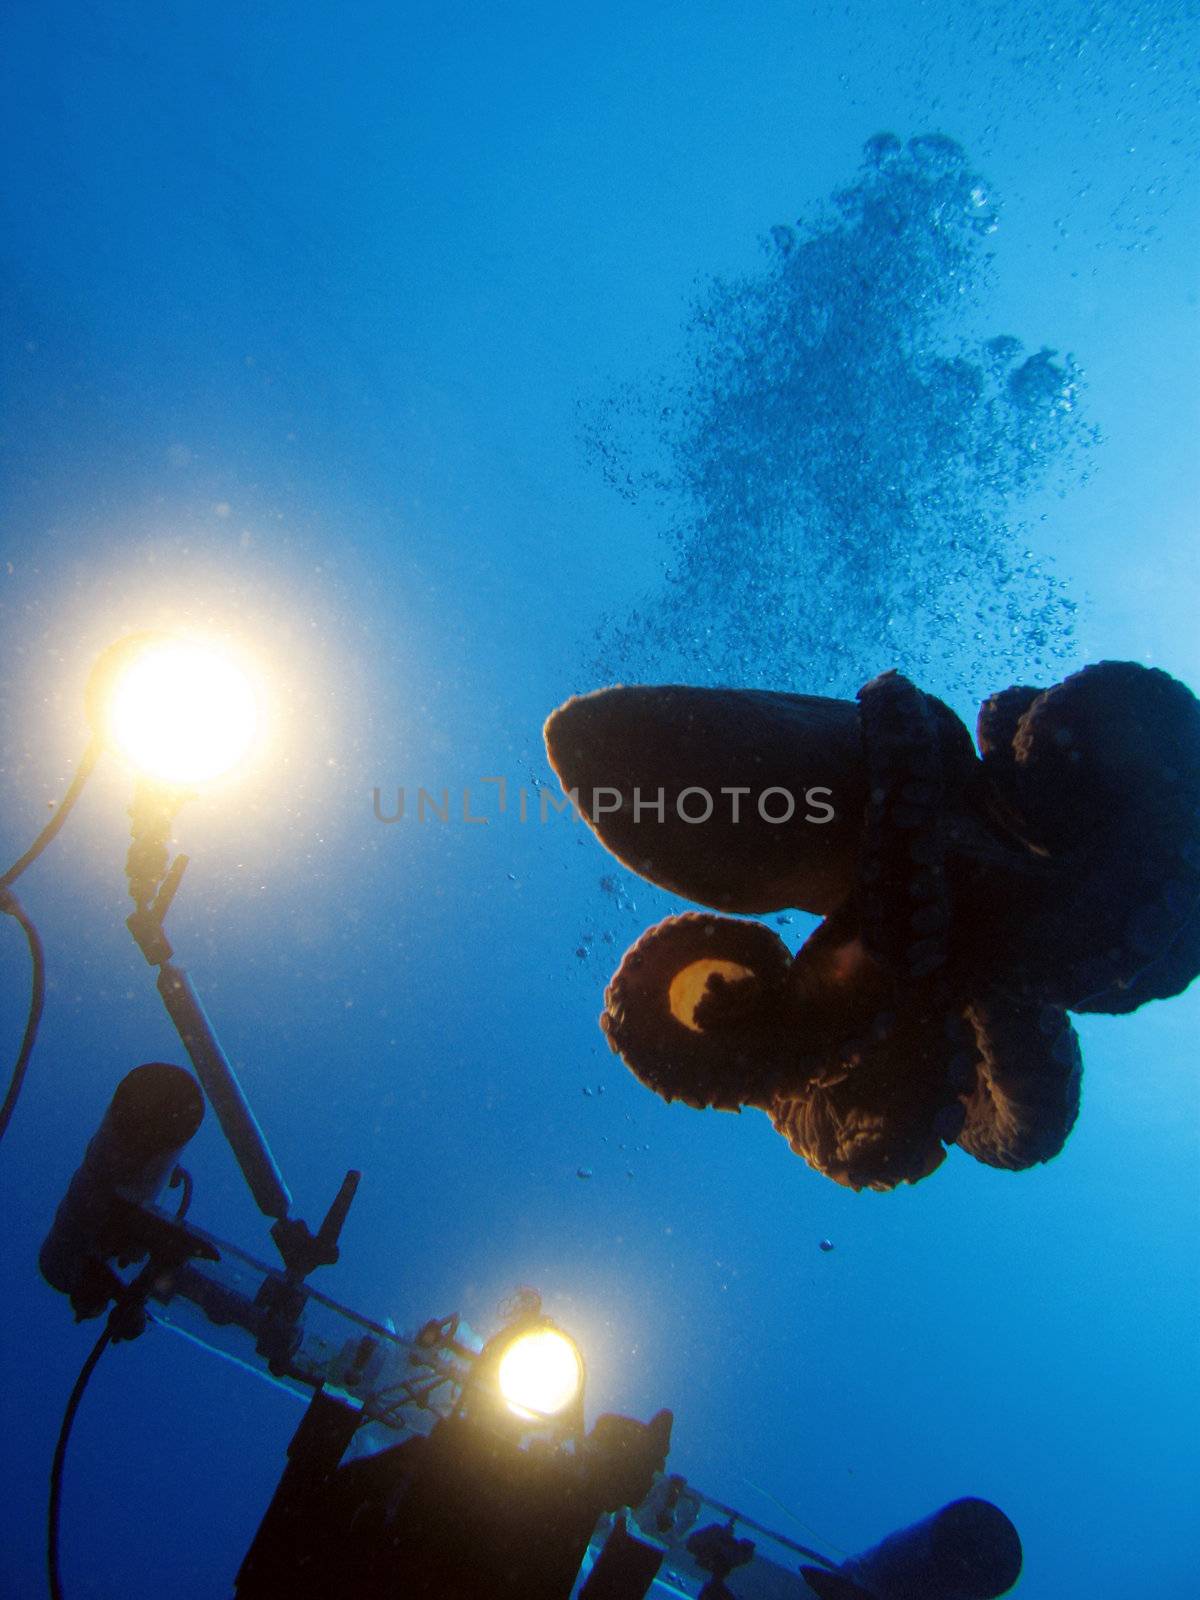 A Underwater cameraman and an Octopus (Octopus Vulgaris).
Shot captured in the wild.